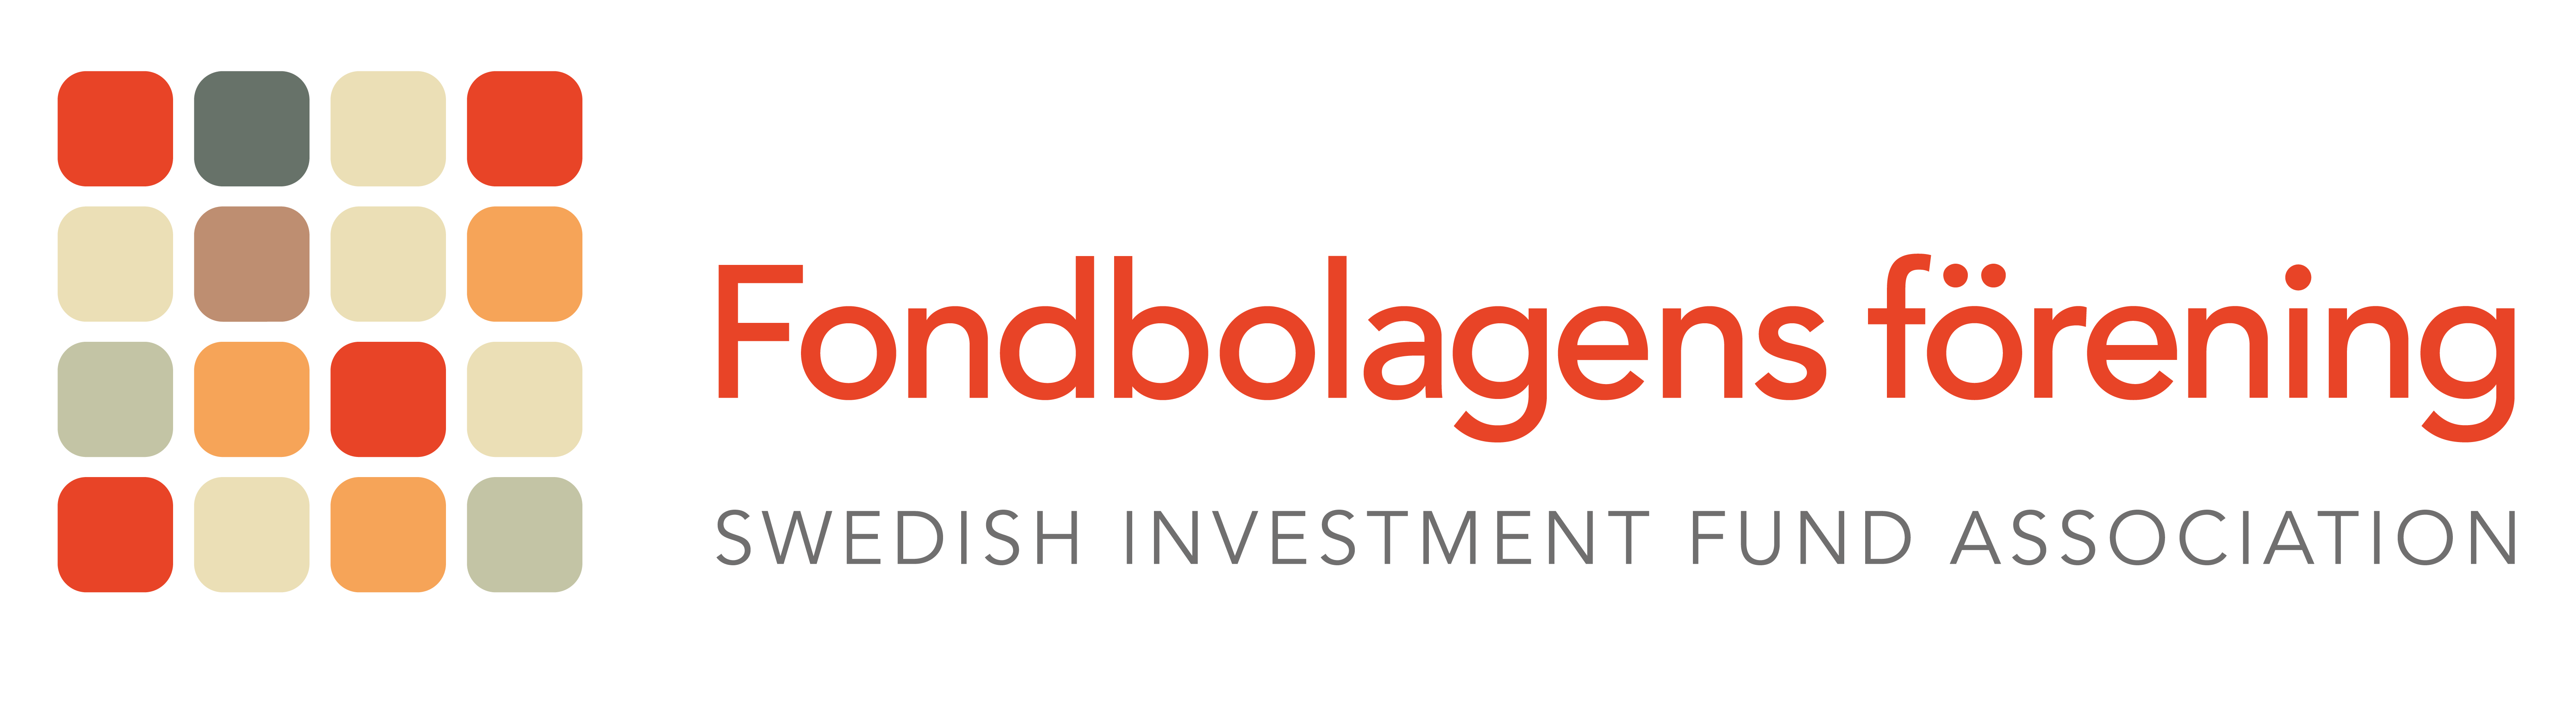 Swedish Investment Fund Association